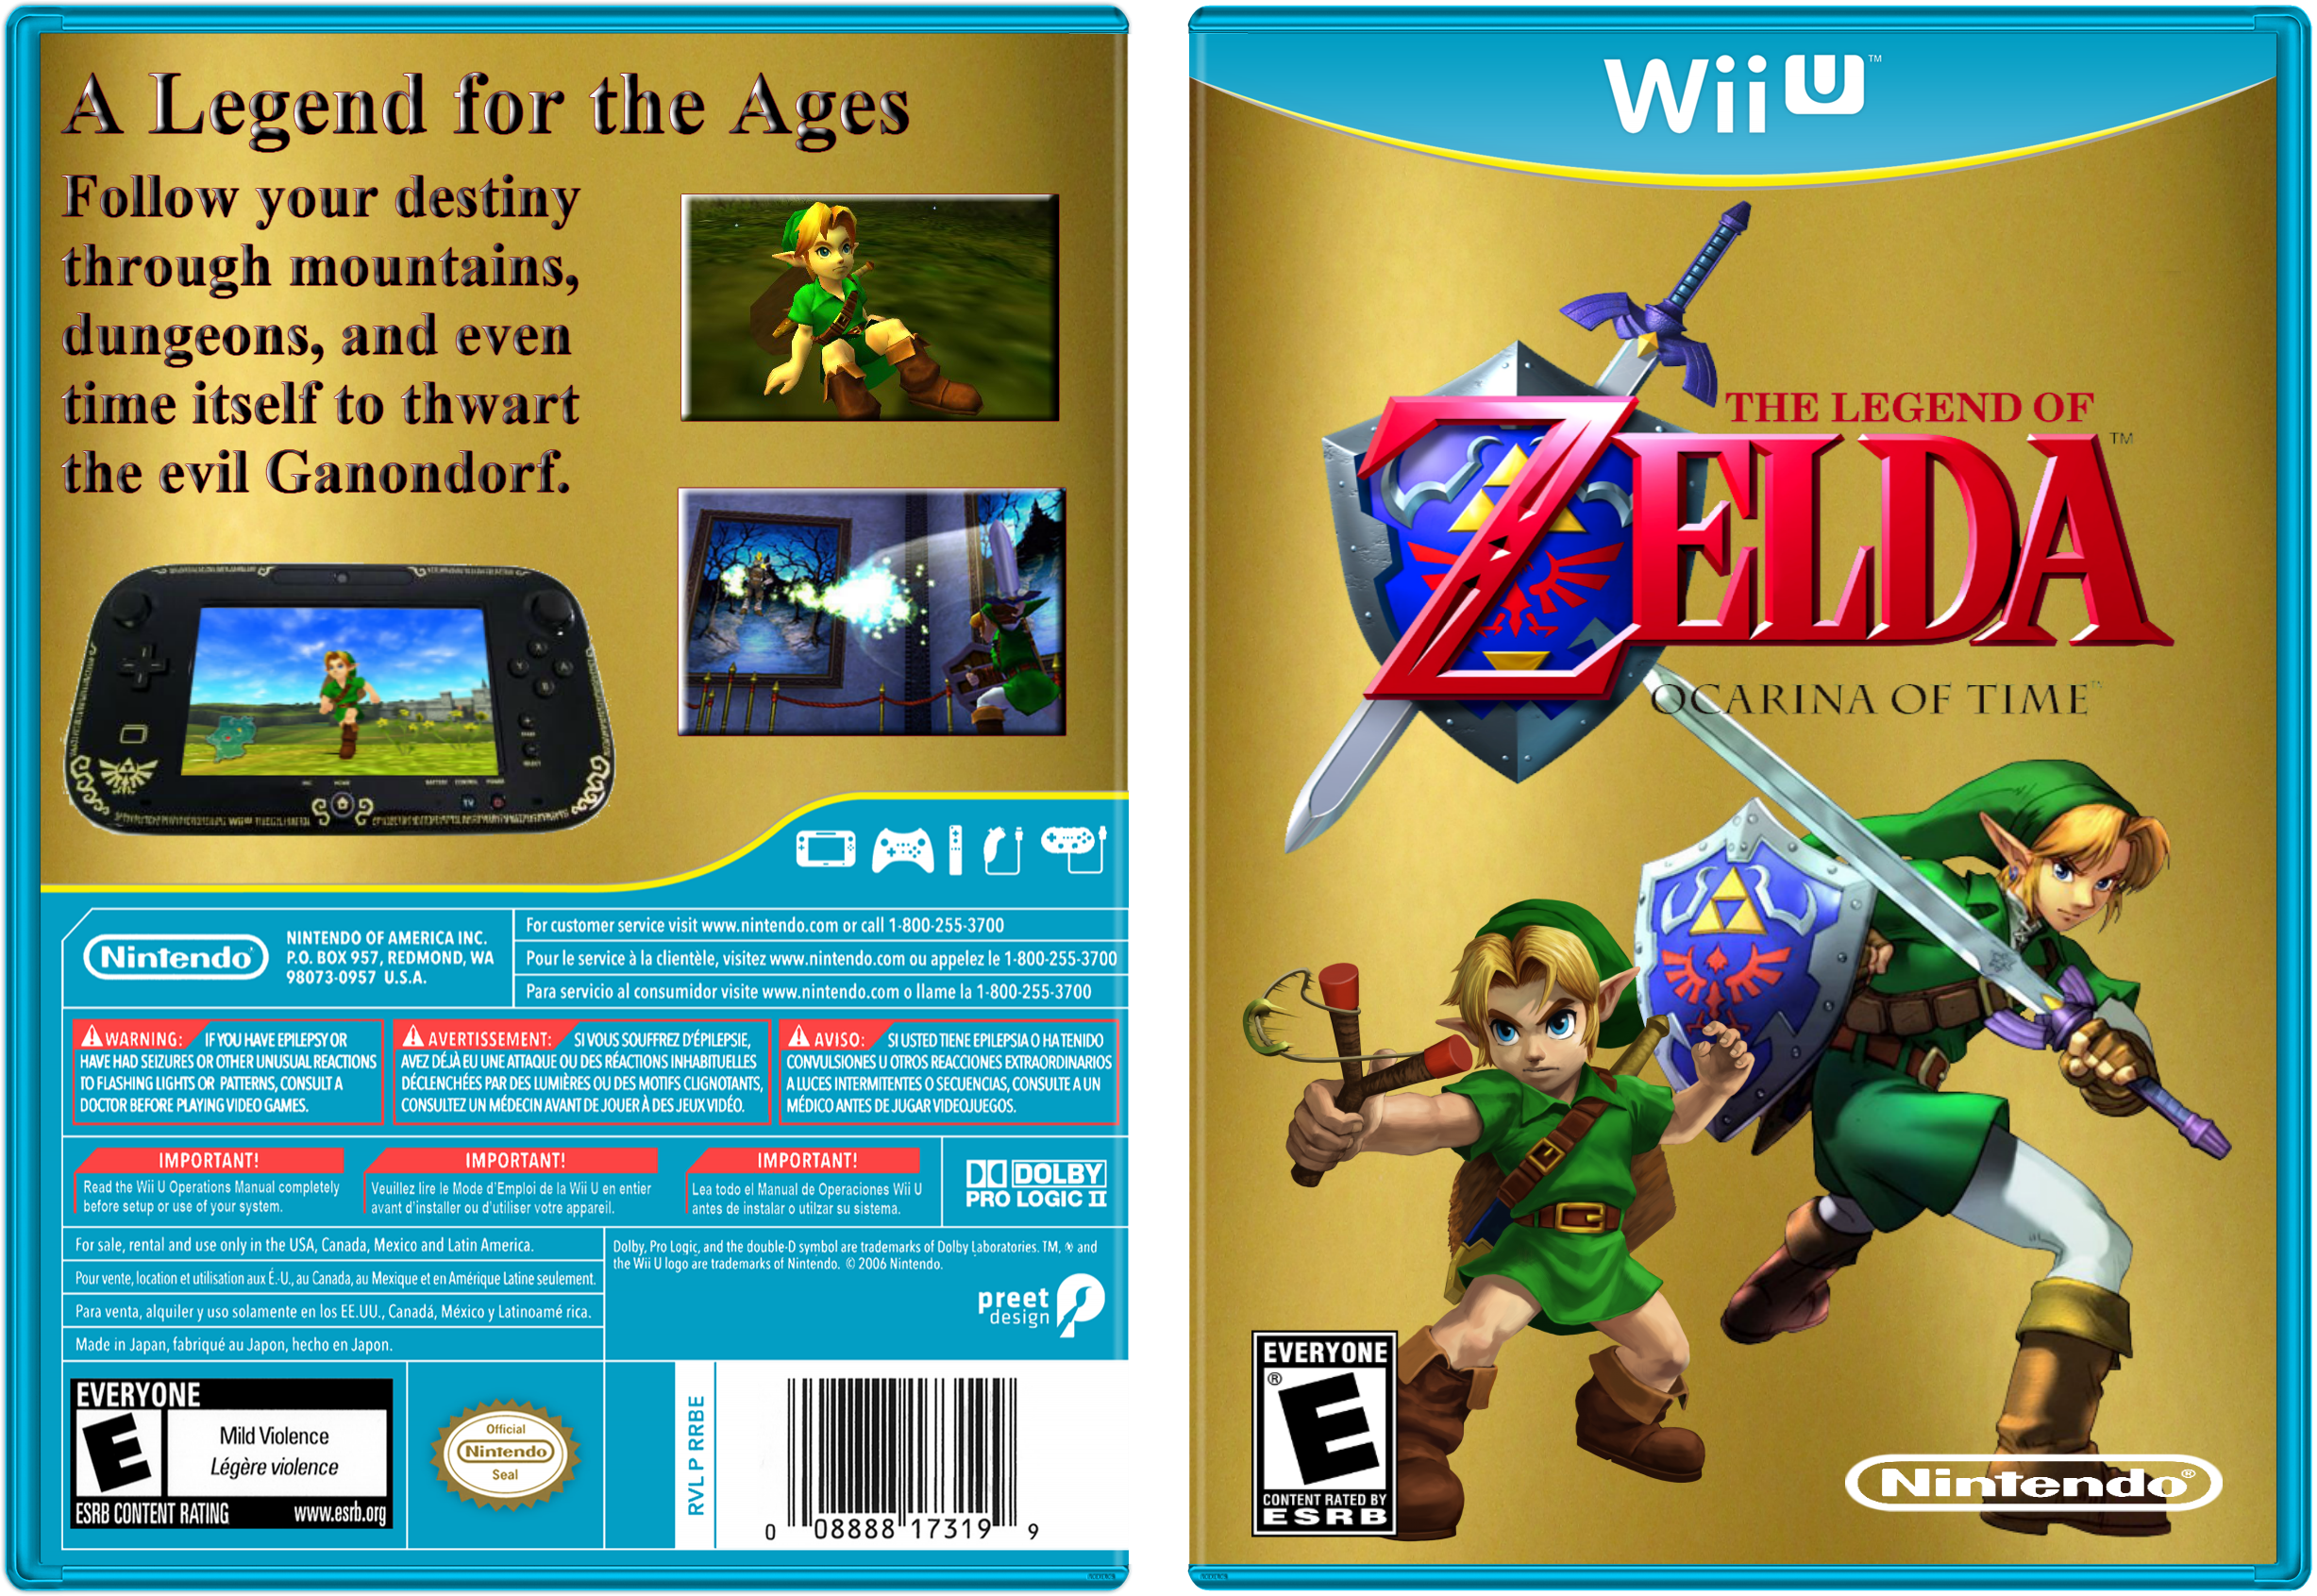 The Legend of Zelda: Ocarina of Time Wii U box cover